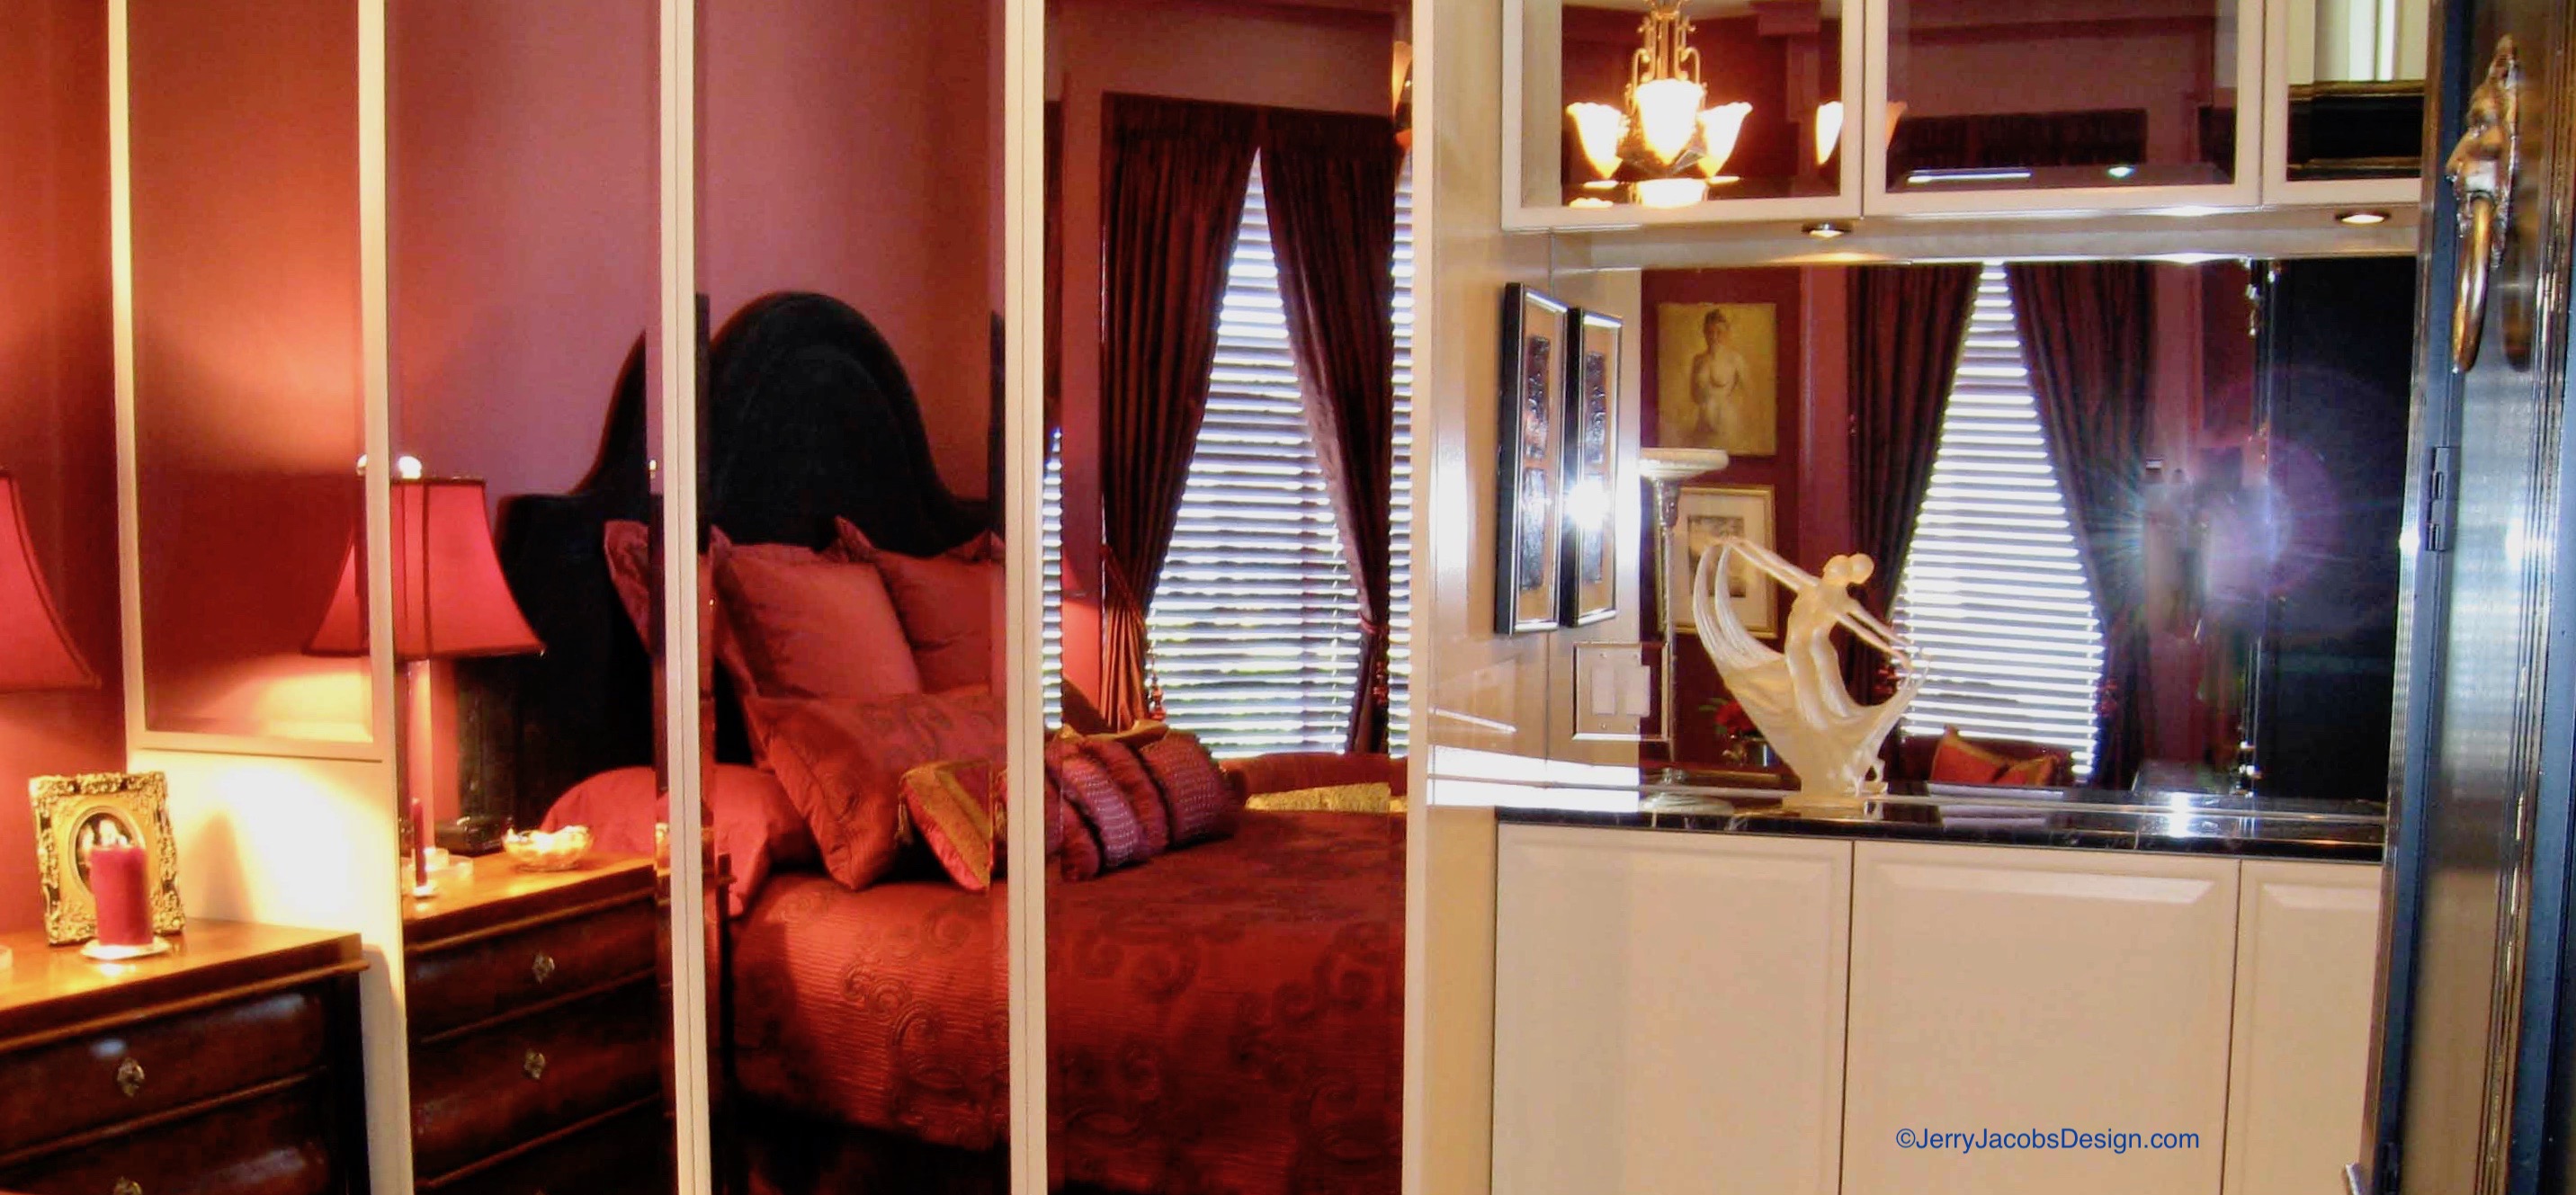 Penthouse Apartment Interior DesignJerry Jacobs Design Mirrored bedroom Jerry Jacobs Design